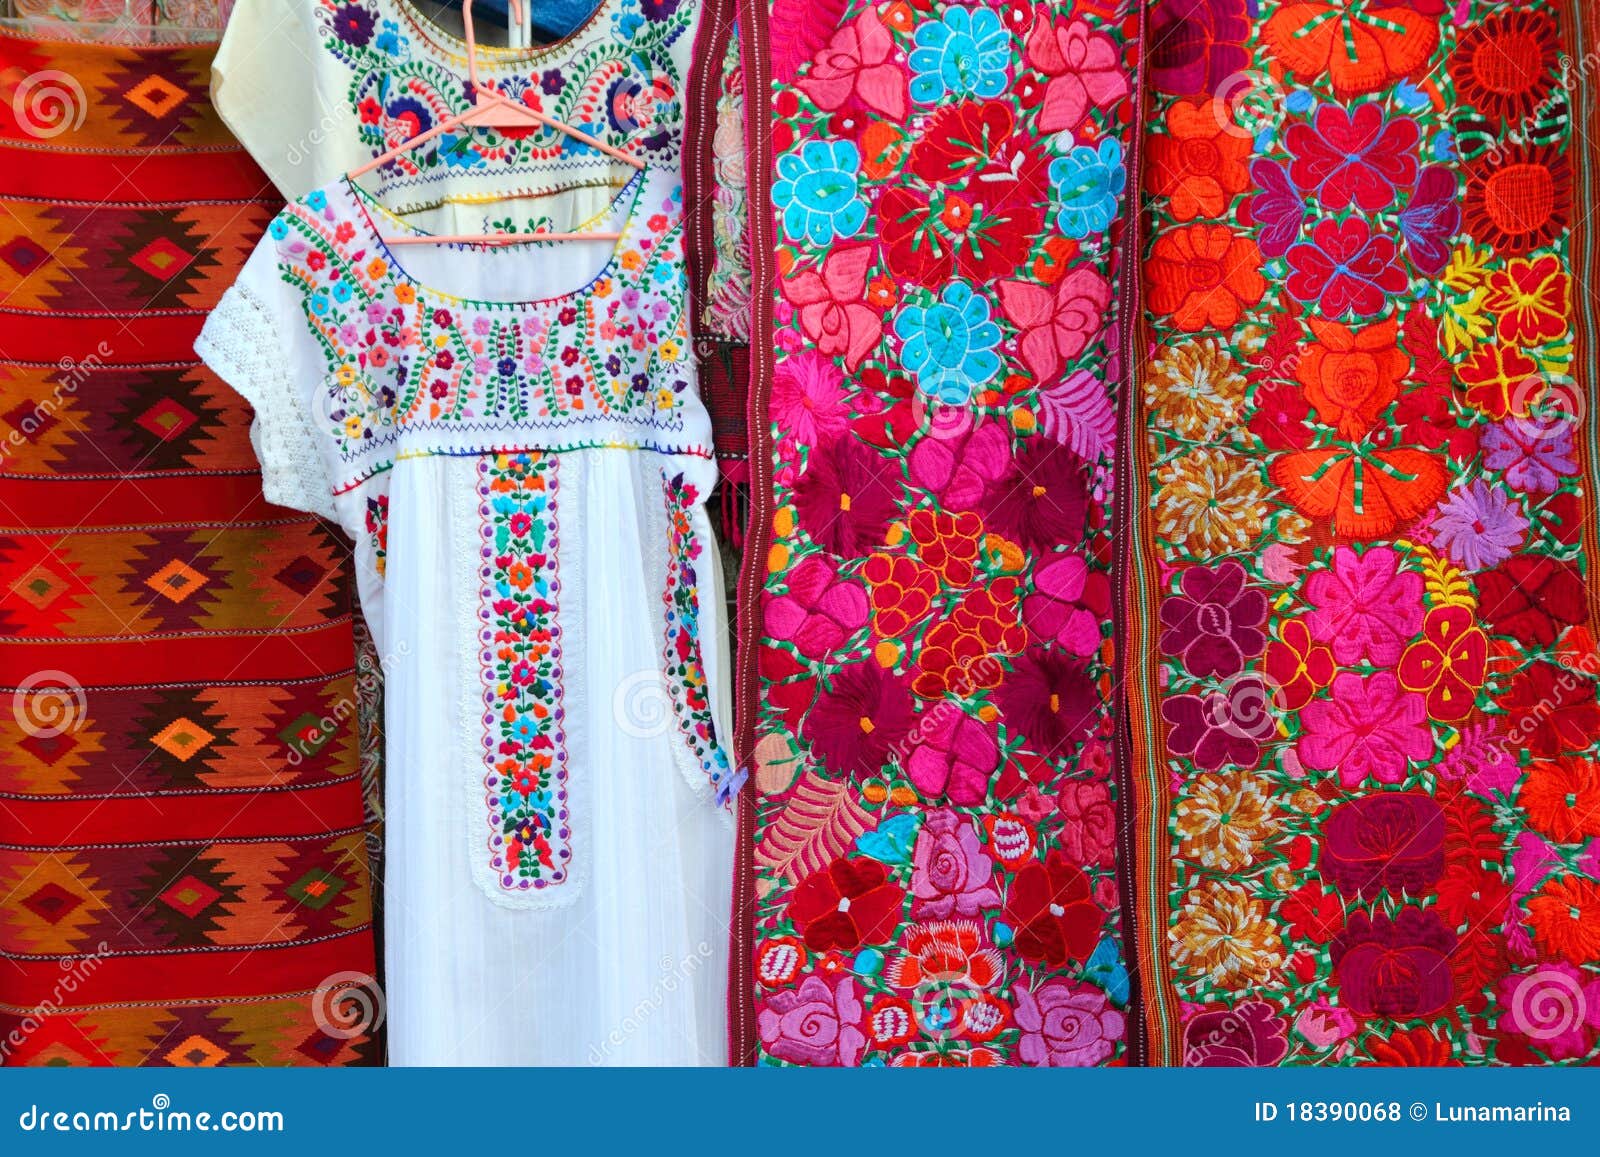 colorful mexican serape fabric chiapas dress